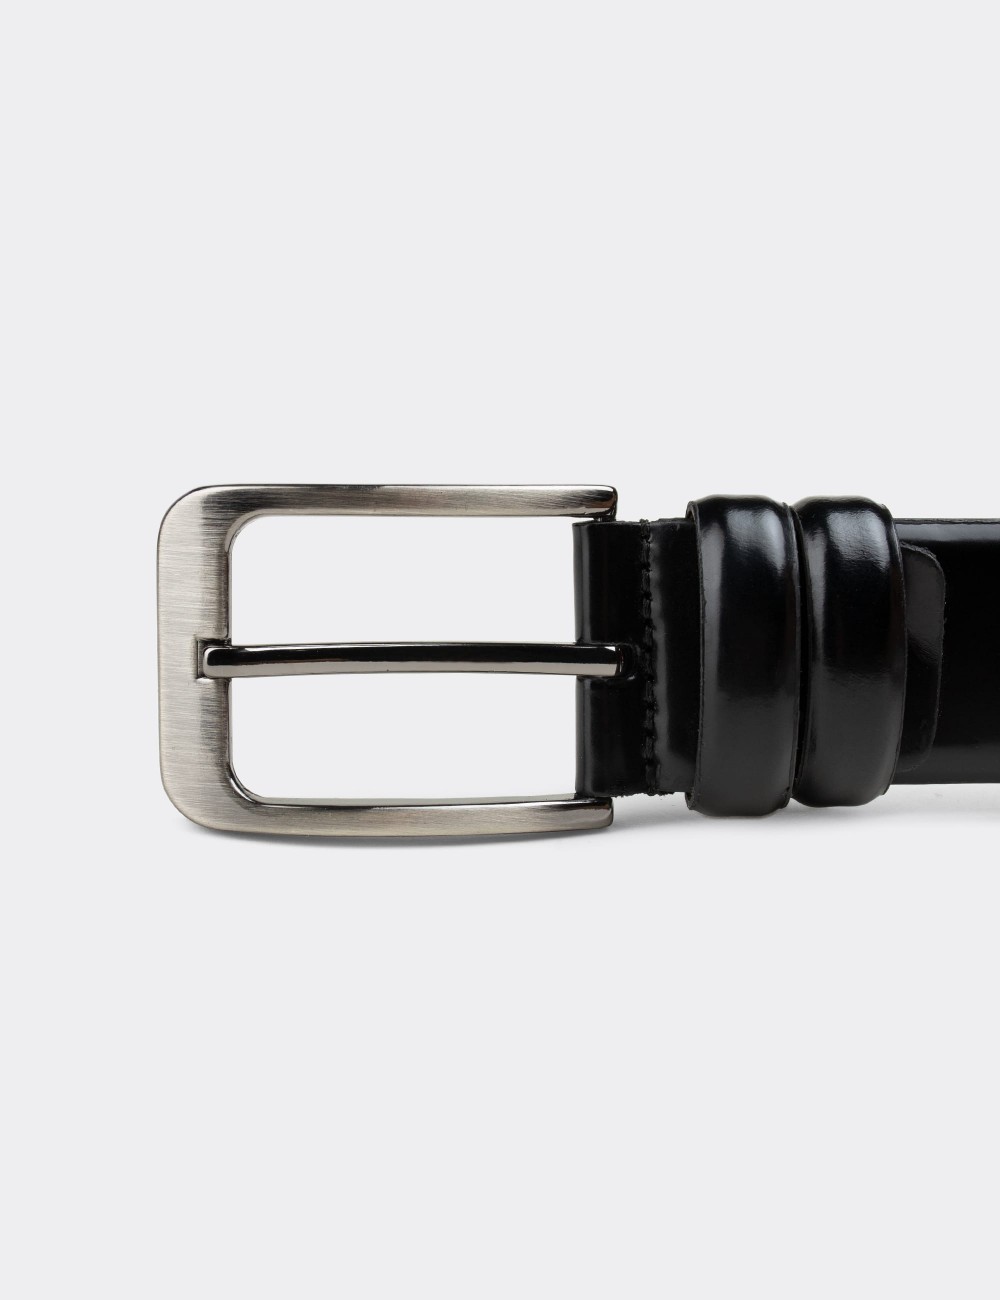 Patent Leather Black Men's Belt - K0402MSYHW01